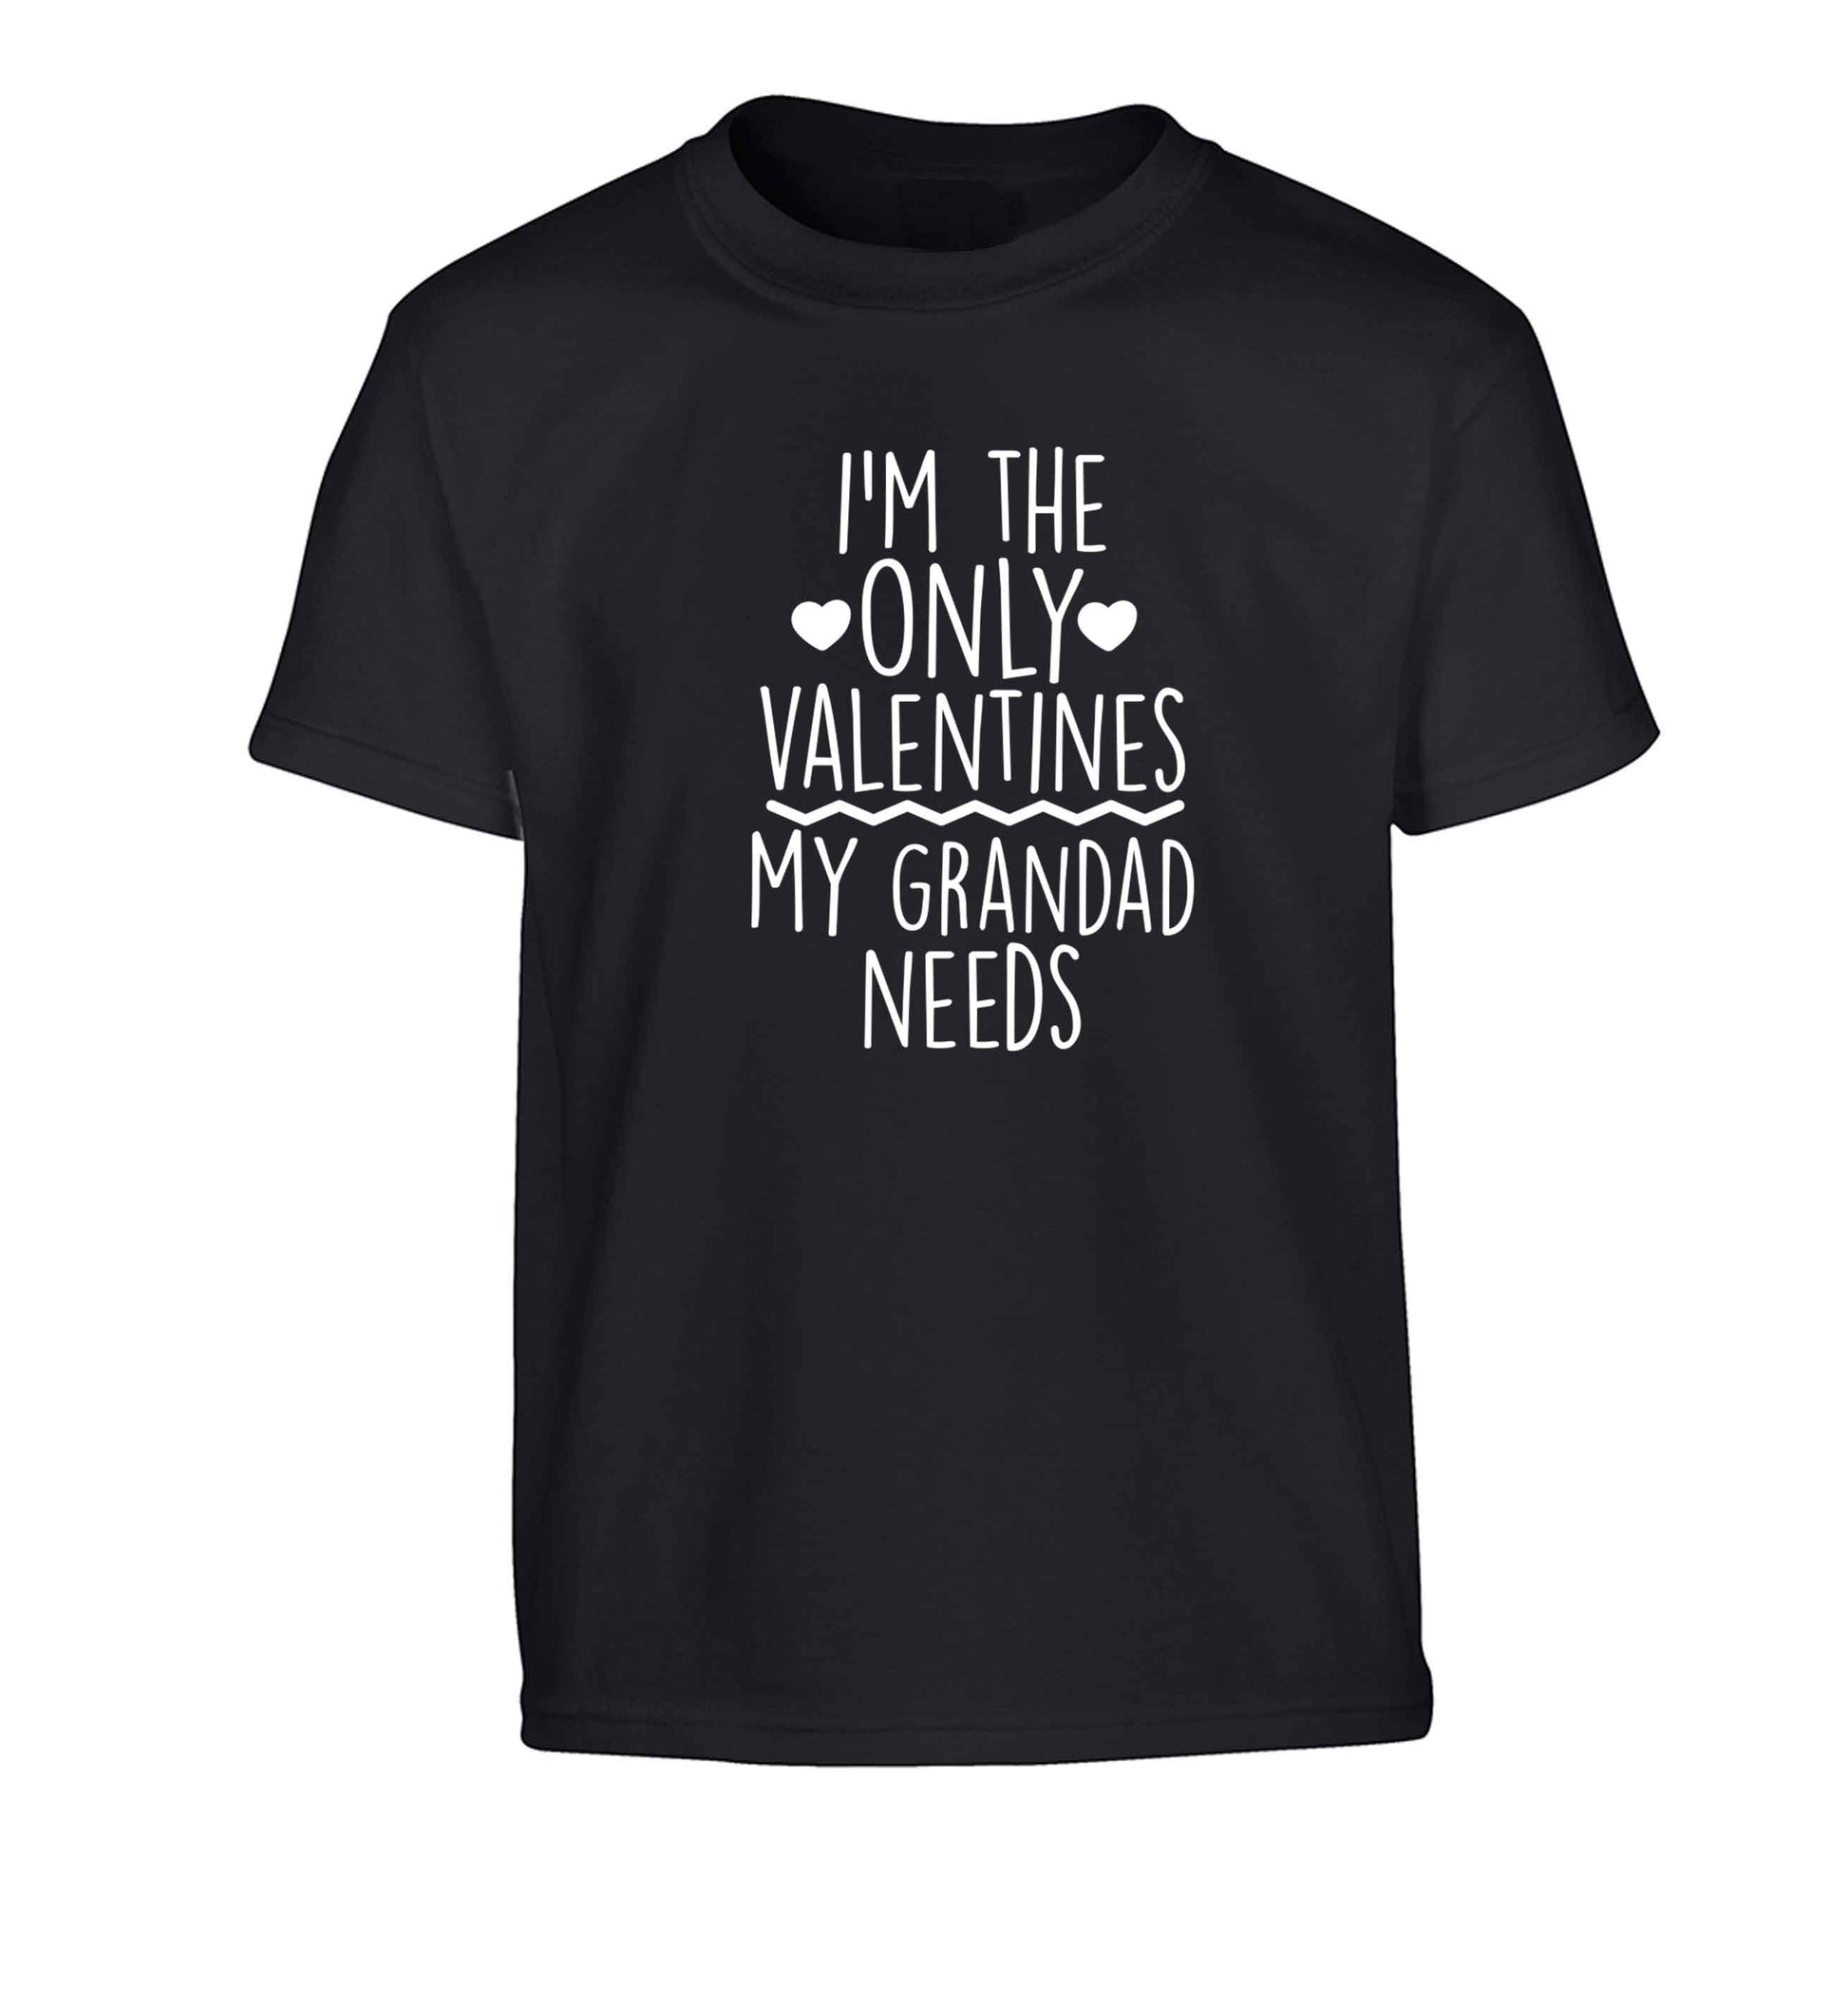 I'm the only valentines my grandad needs Children's black Tshirt 12-13 Years